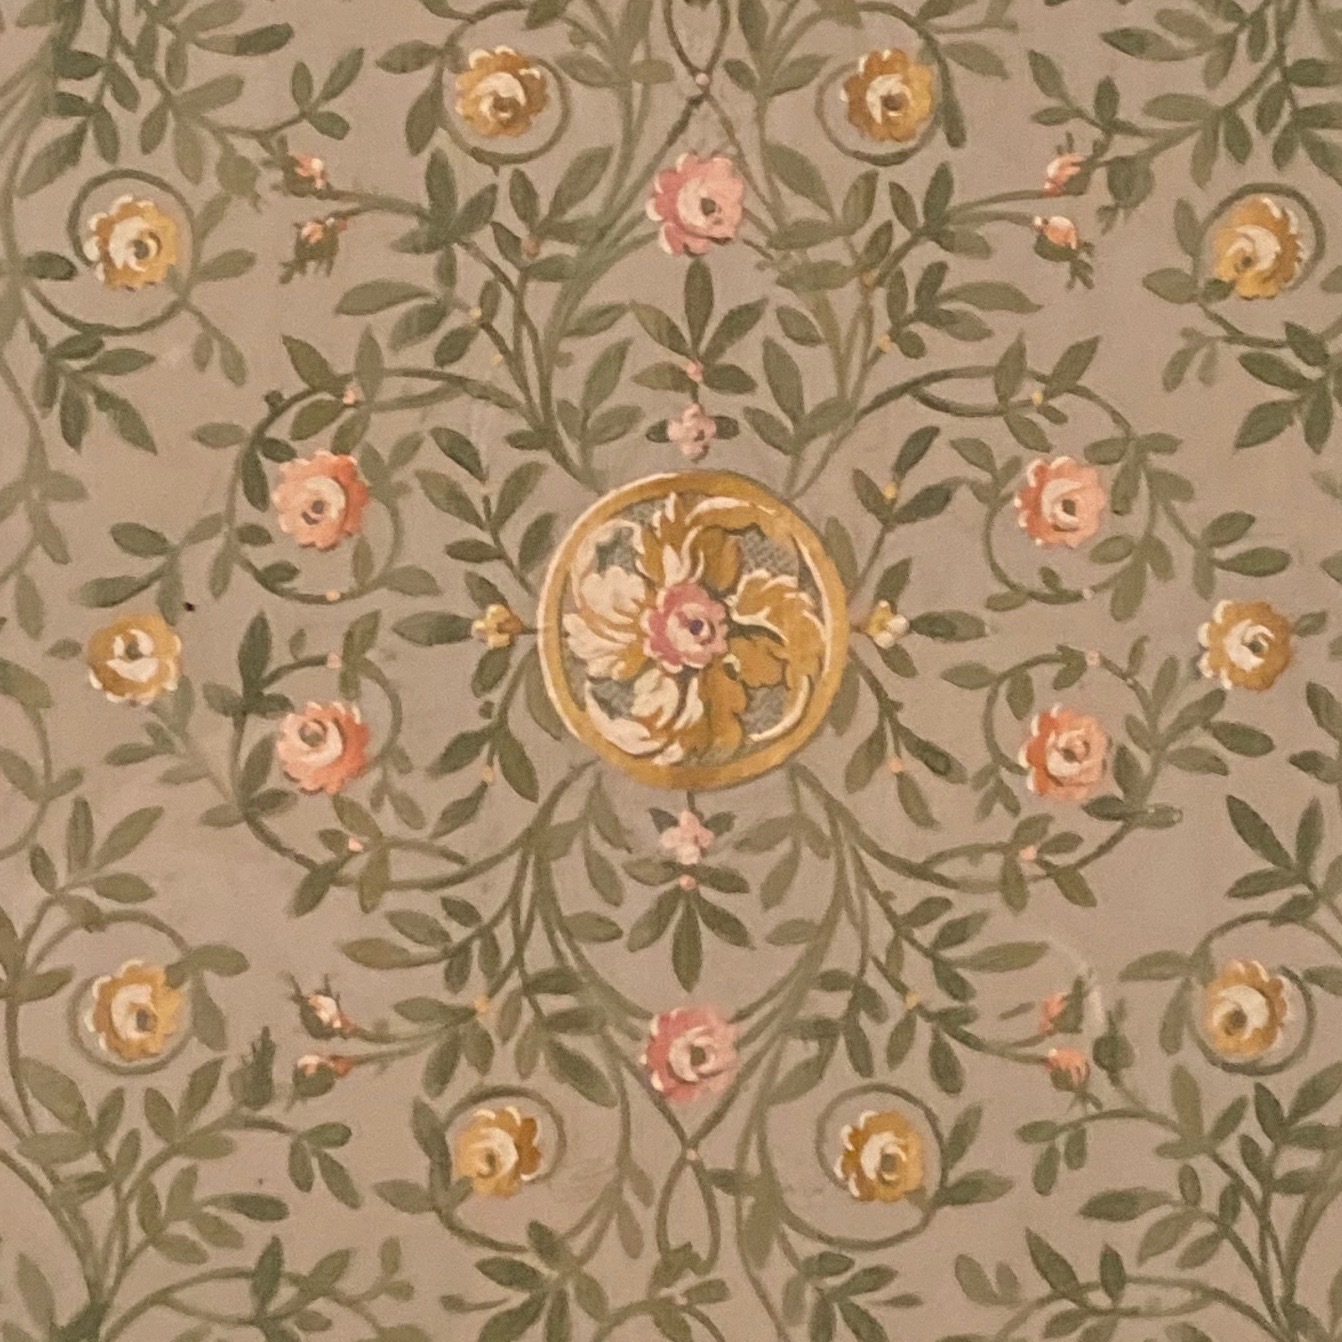 handpainted-textile-pattern0003